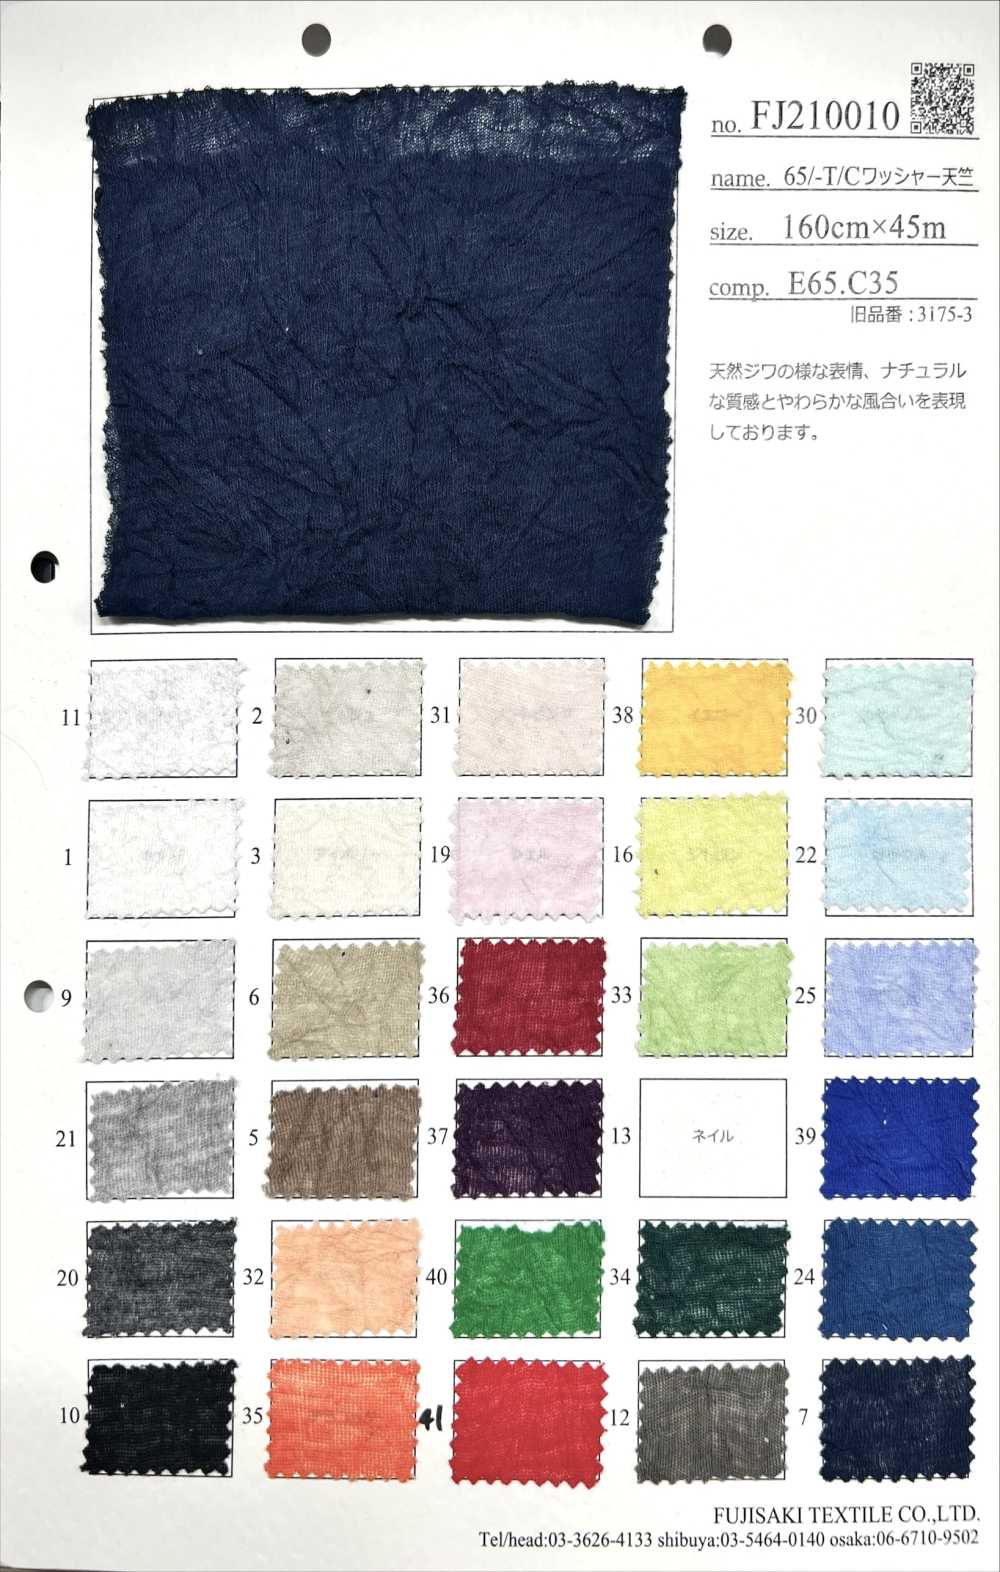 FJ210010 Jersey Procesado Con Lavadora 65/-T/C[Fabrica Textil] Fujisaki Textile